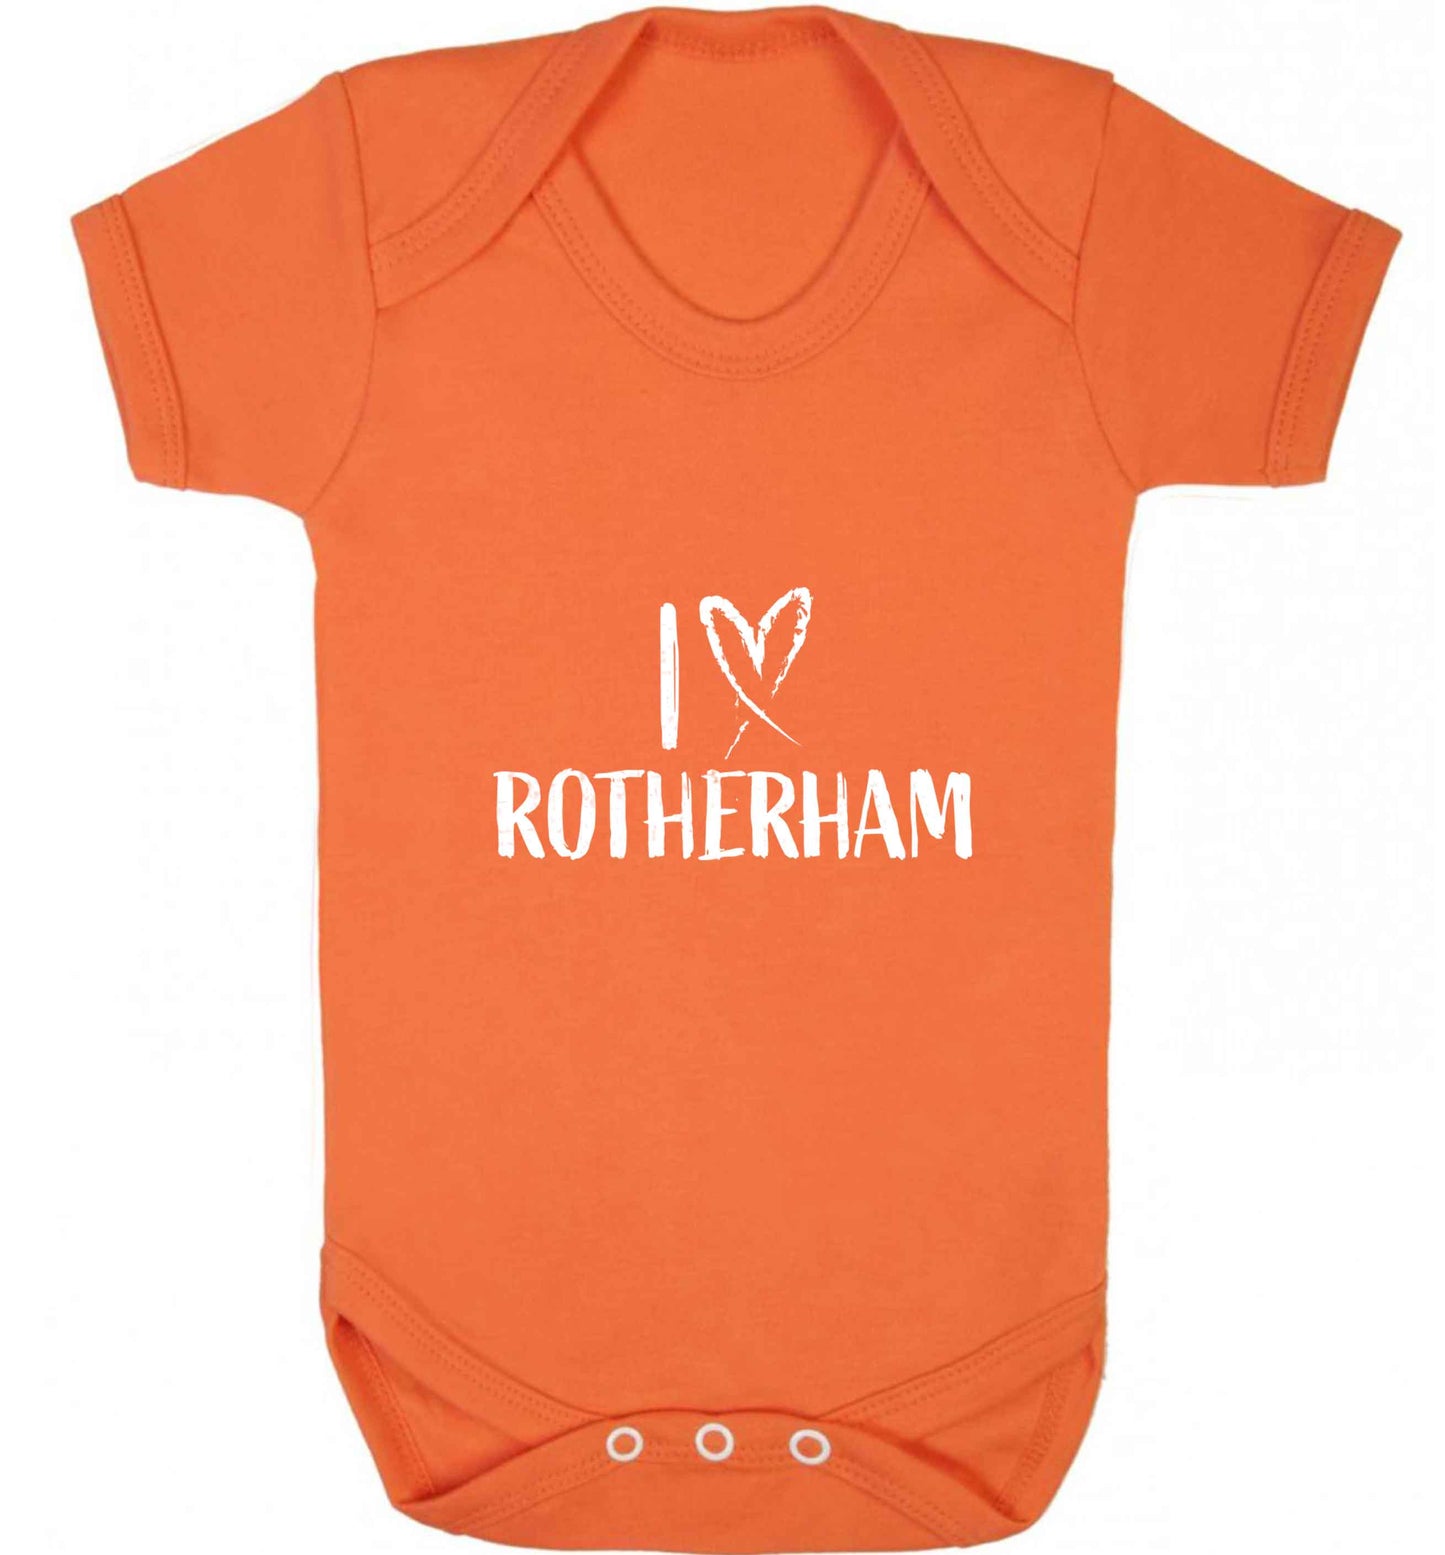 I love Rotherham baby vest orange 18-24 months